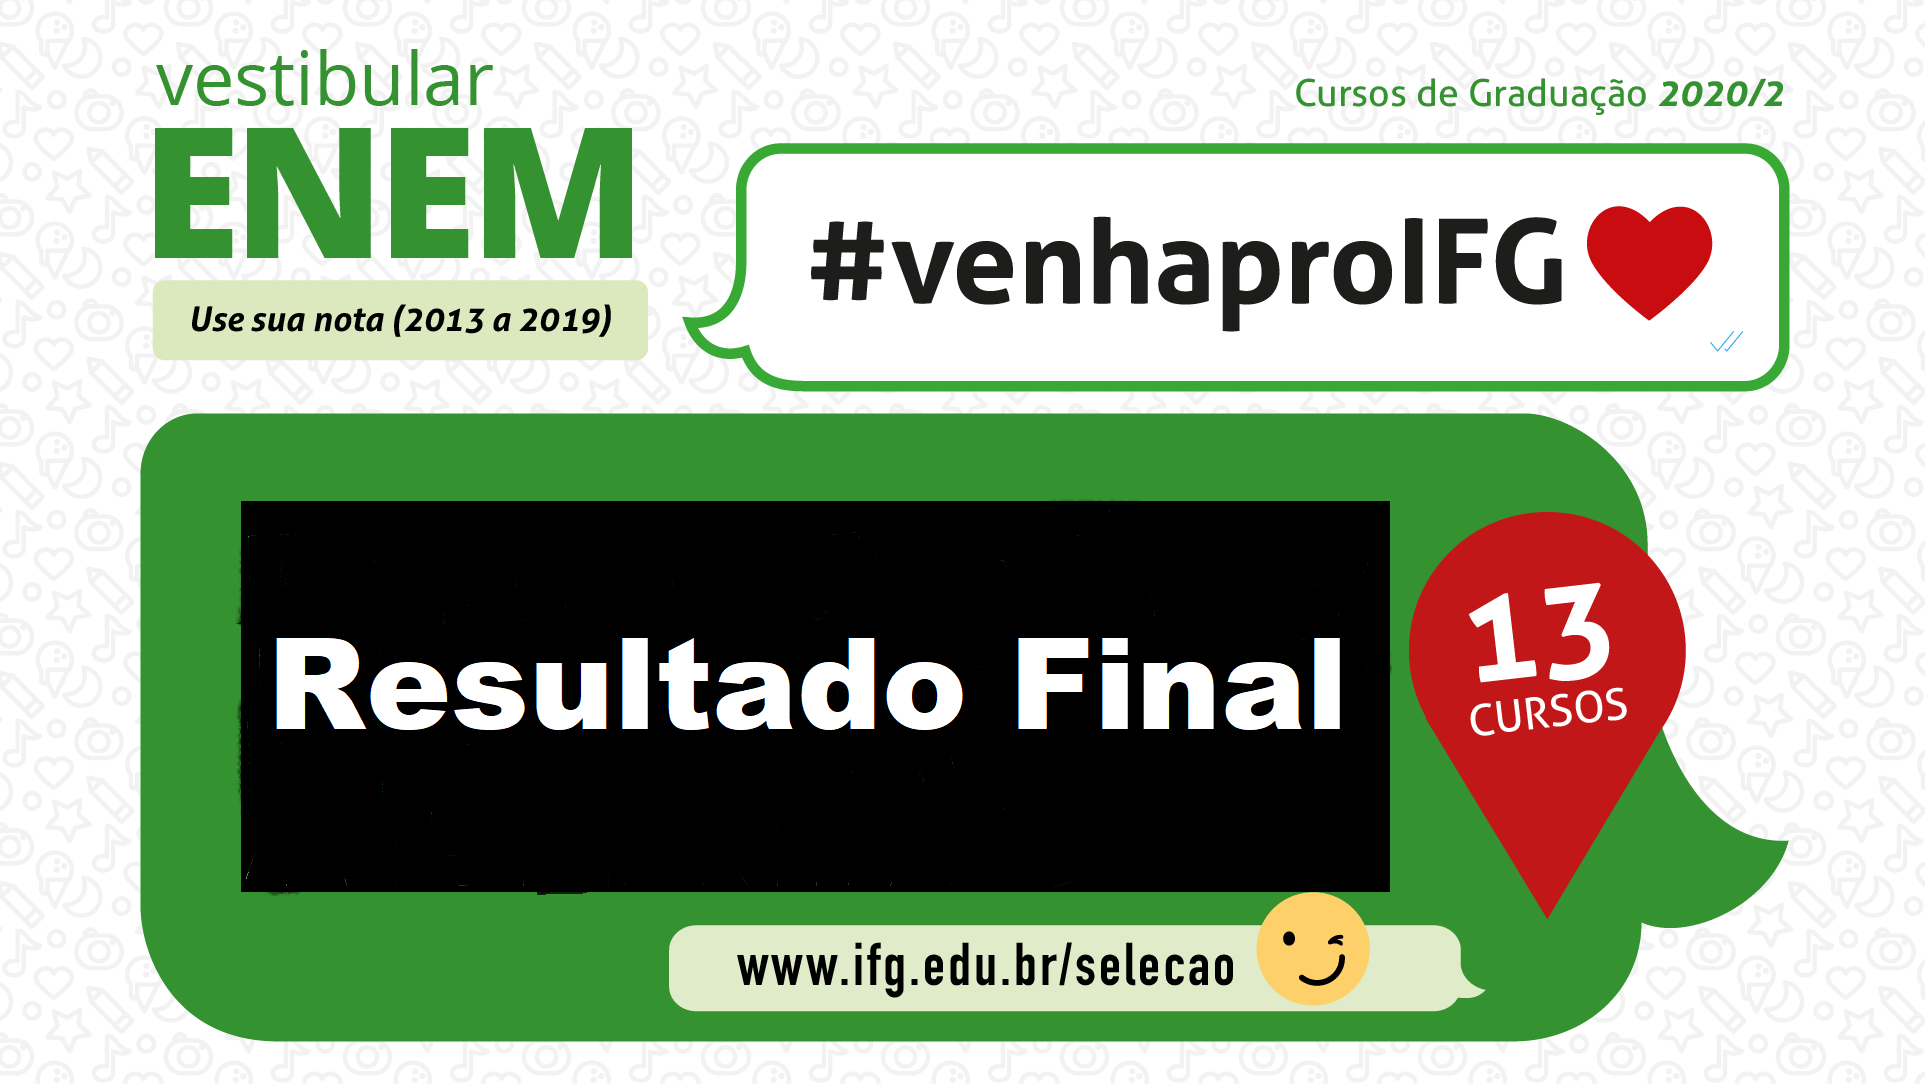 IFG-Vestibular-Enem-2020-2-Destaque-Resultadofinal.png - 203.08 kb